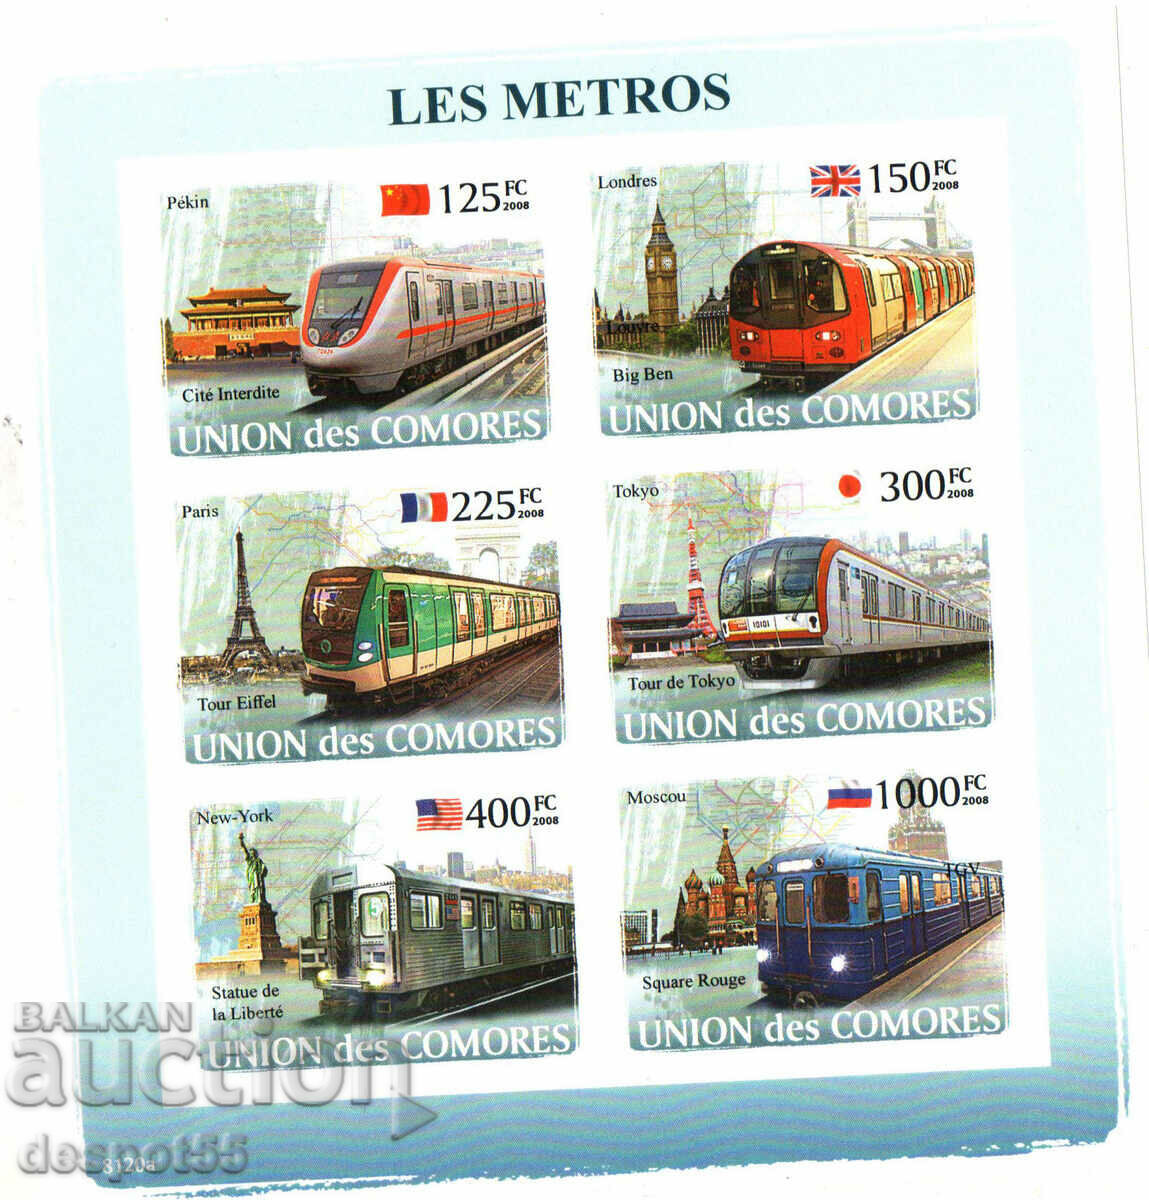 2008. Comoros Islands. Subway trains from around the world. Block.